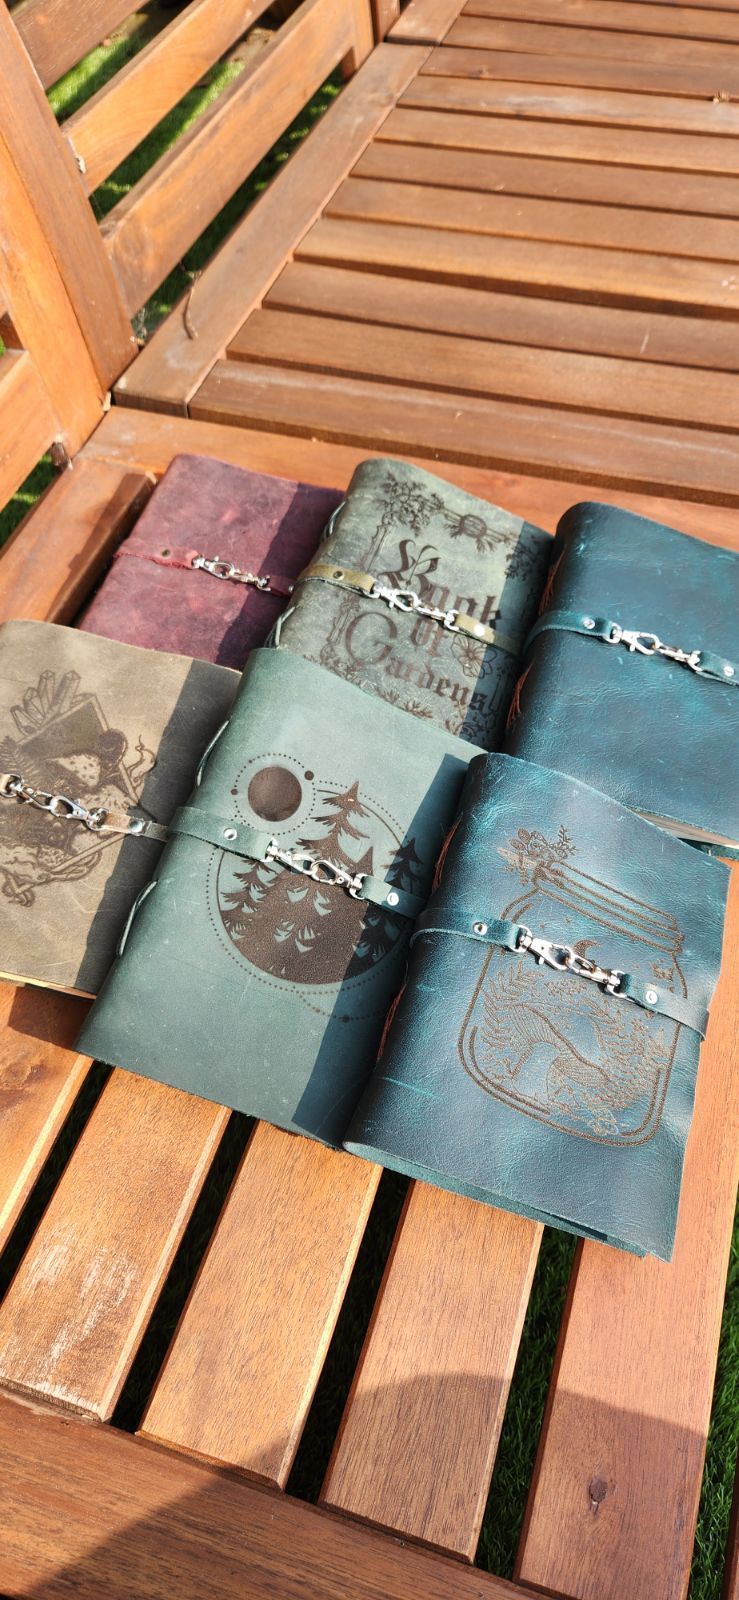 Book of Gardens leather journal & sketchbook